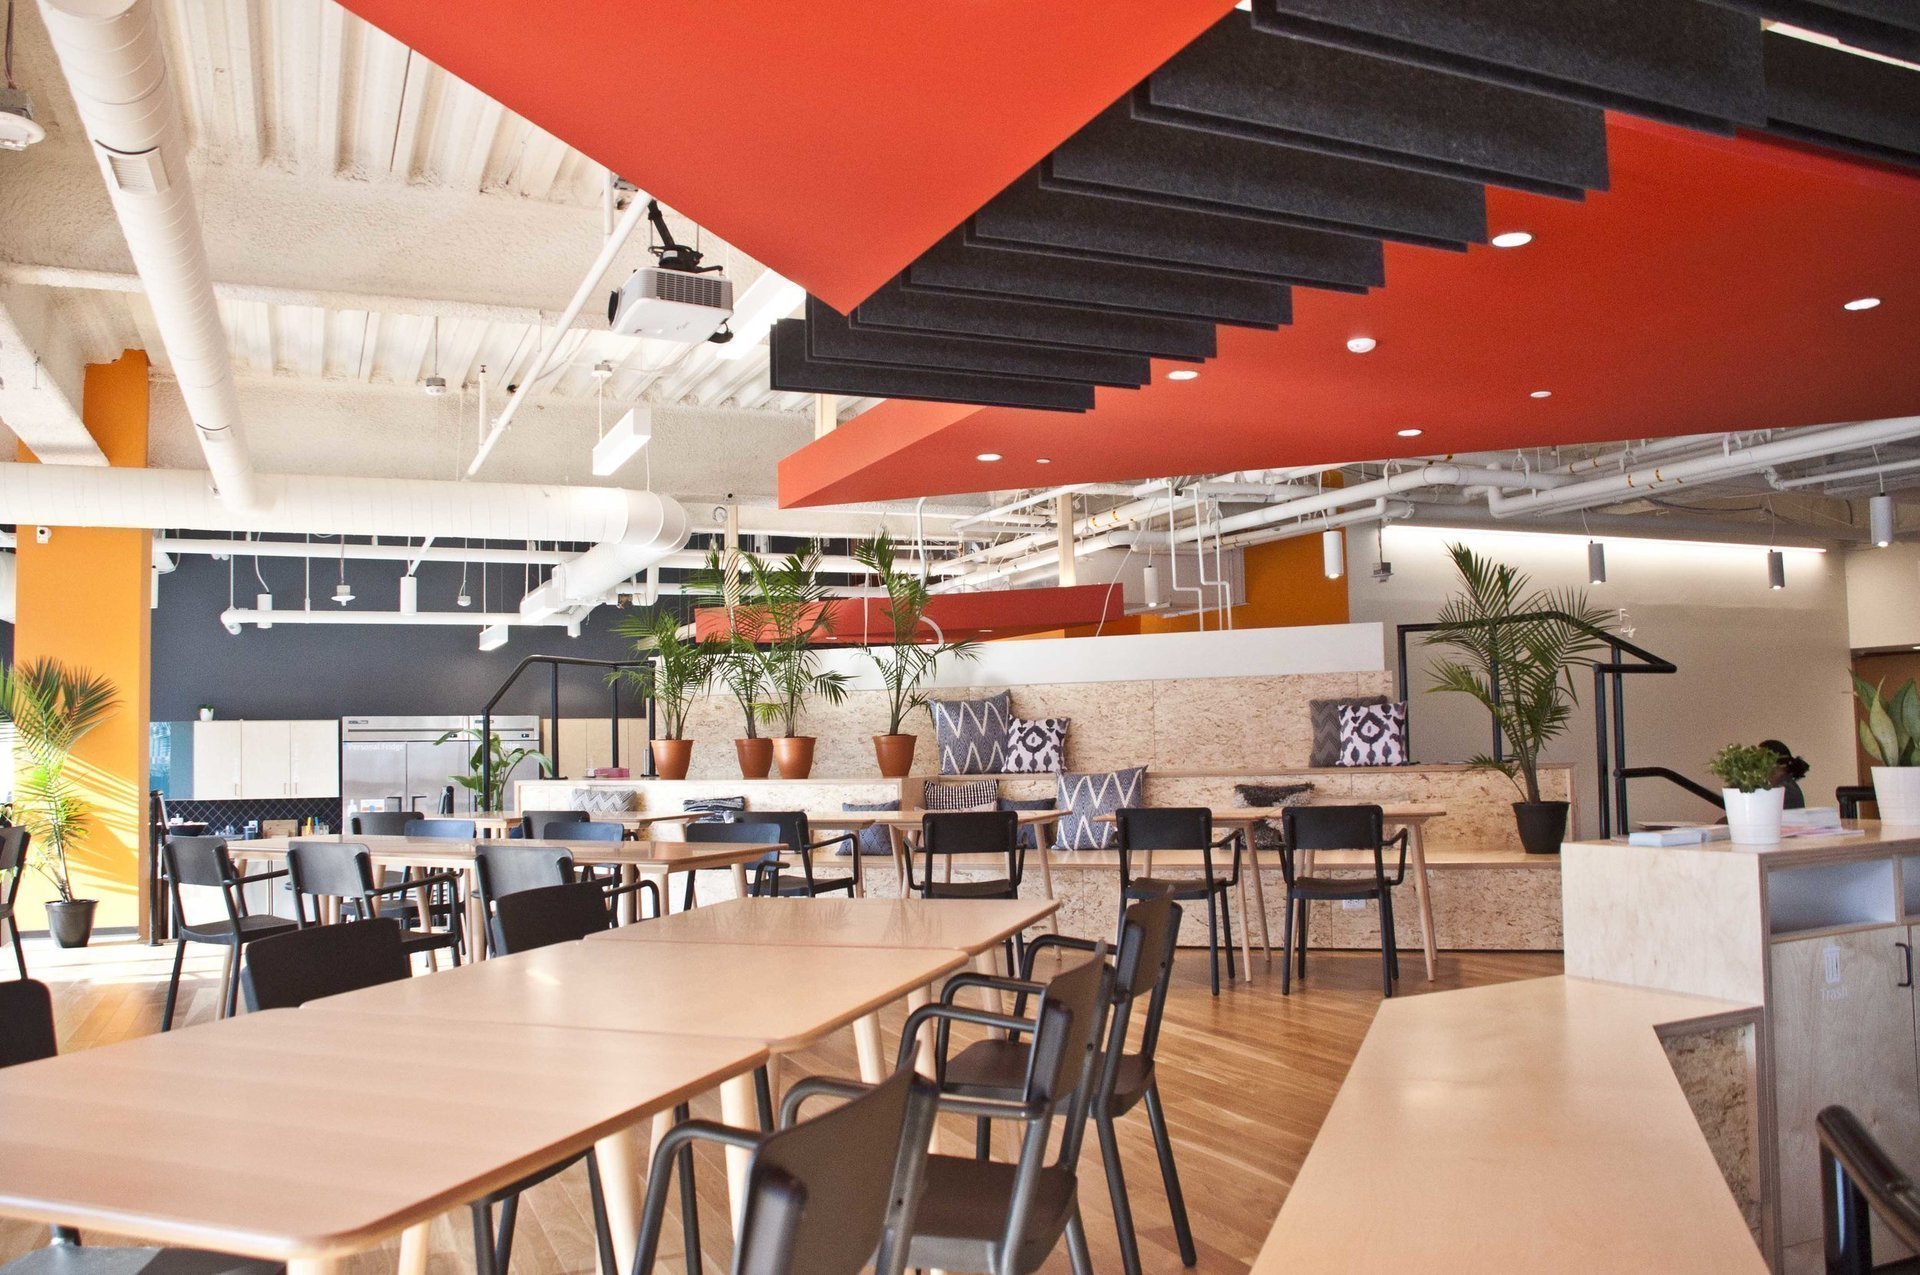 Venture Cafe Philadelphia: A Work-Friendly Place in Philadelphia